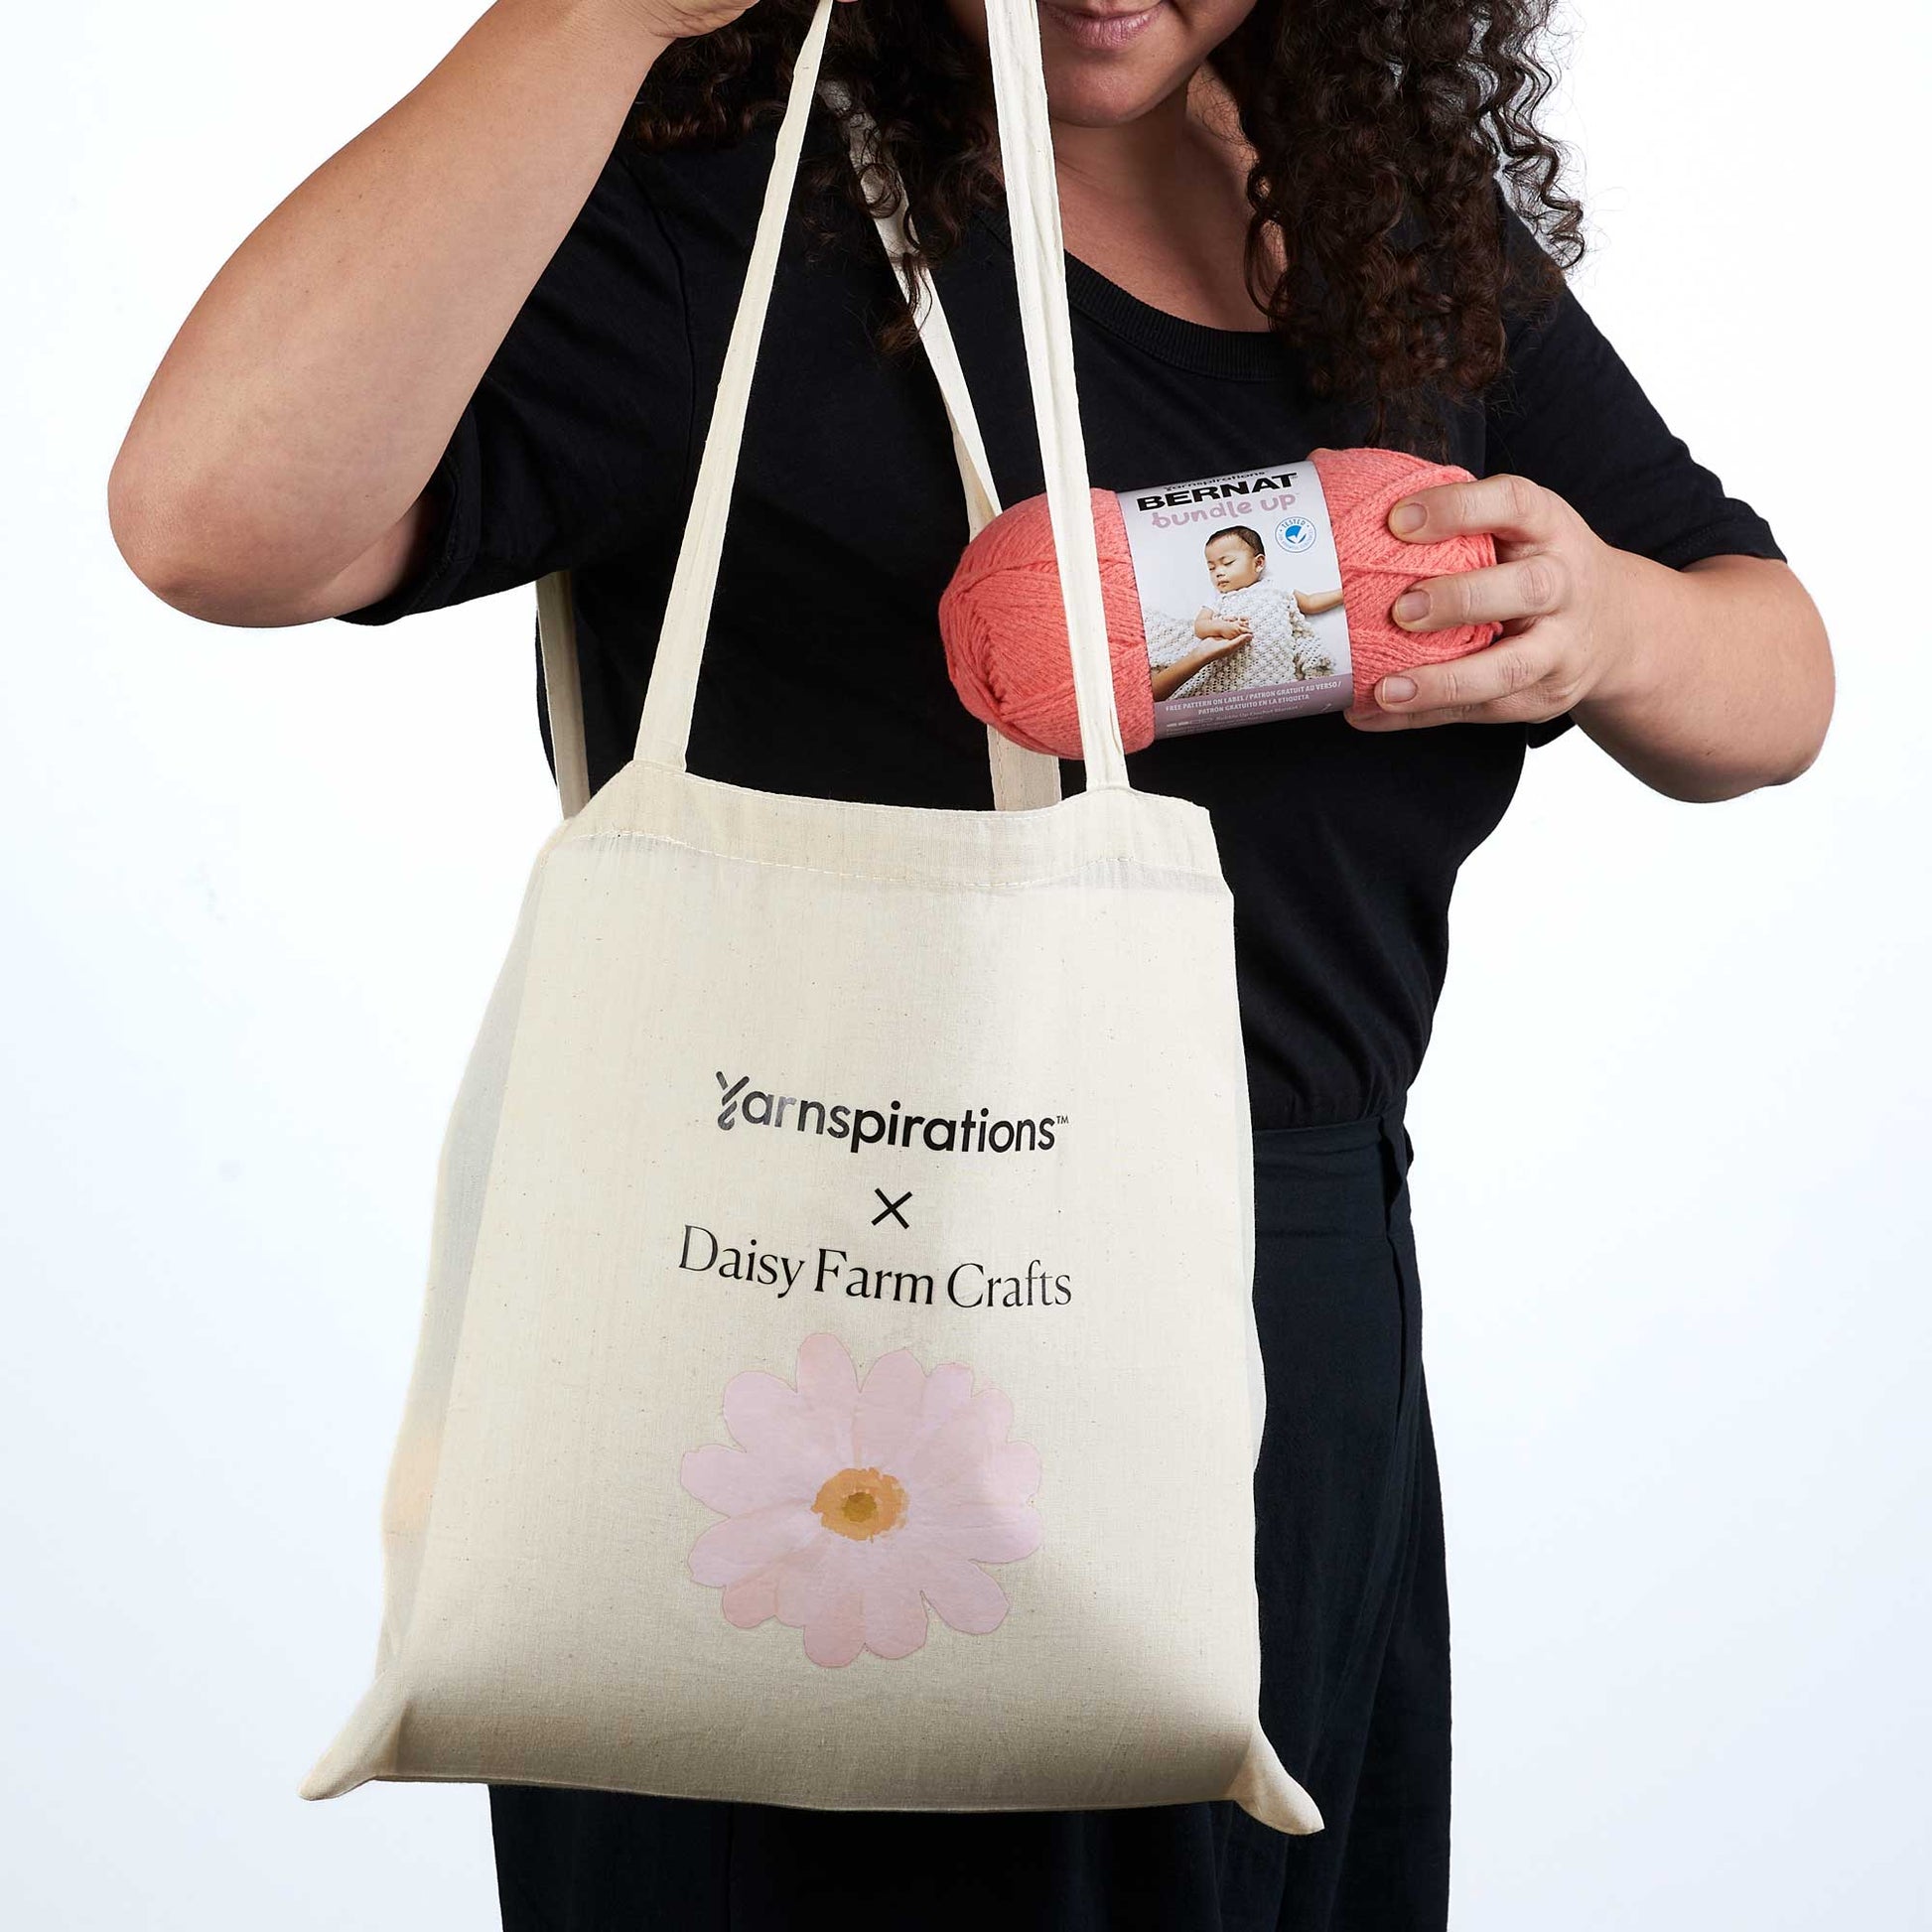 Yarnspirations x Daisy Farm Crafts Bundle Up Yarn Sale! - Daisy